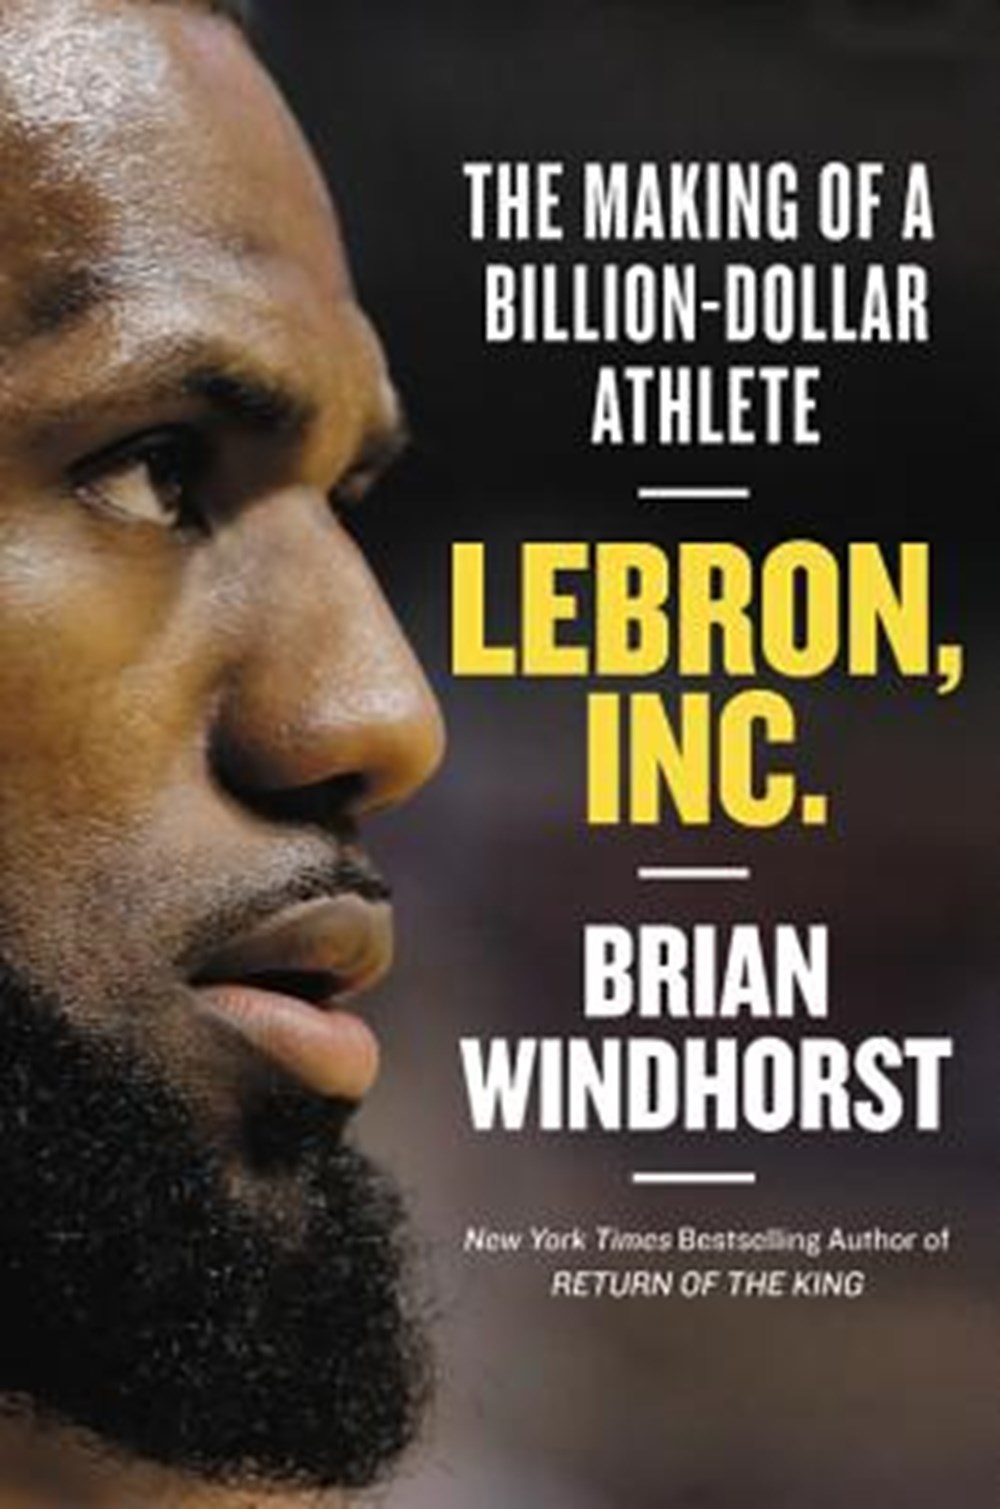 Lebron, Inc. The Making of a Billion-Dollar Athlete